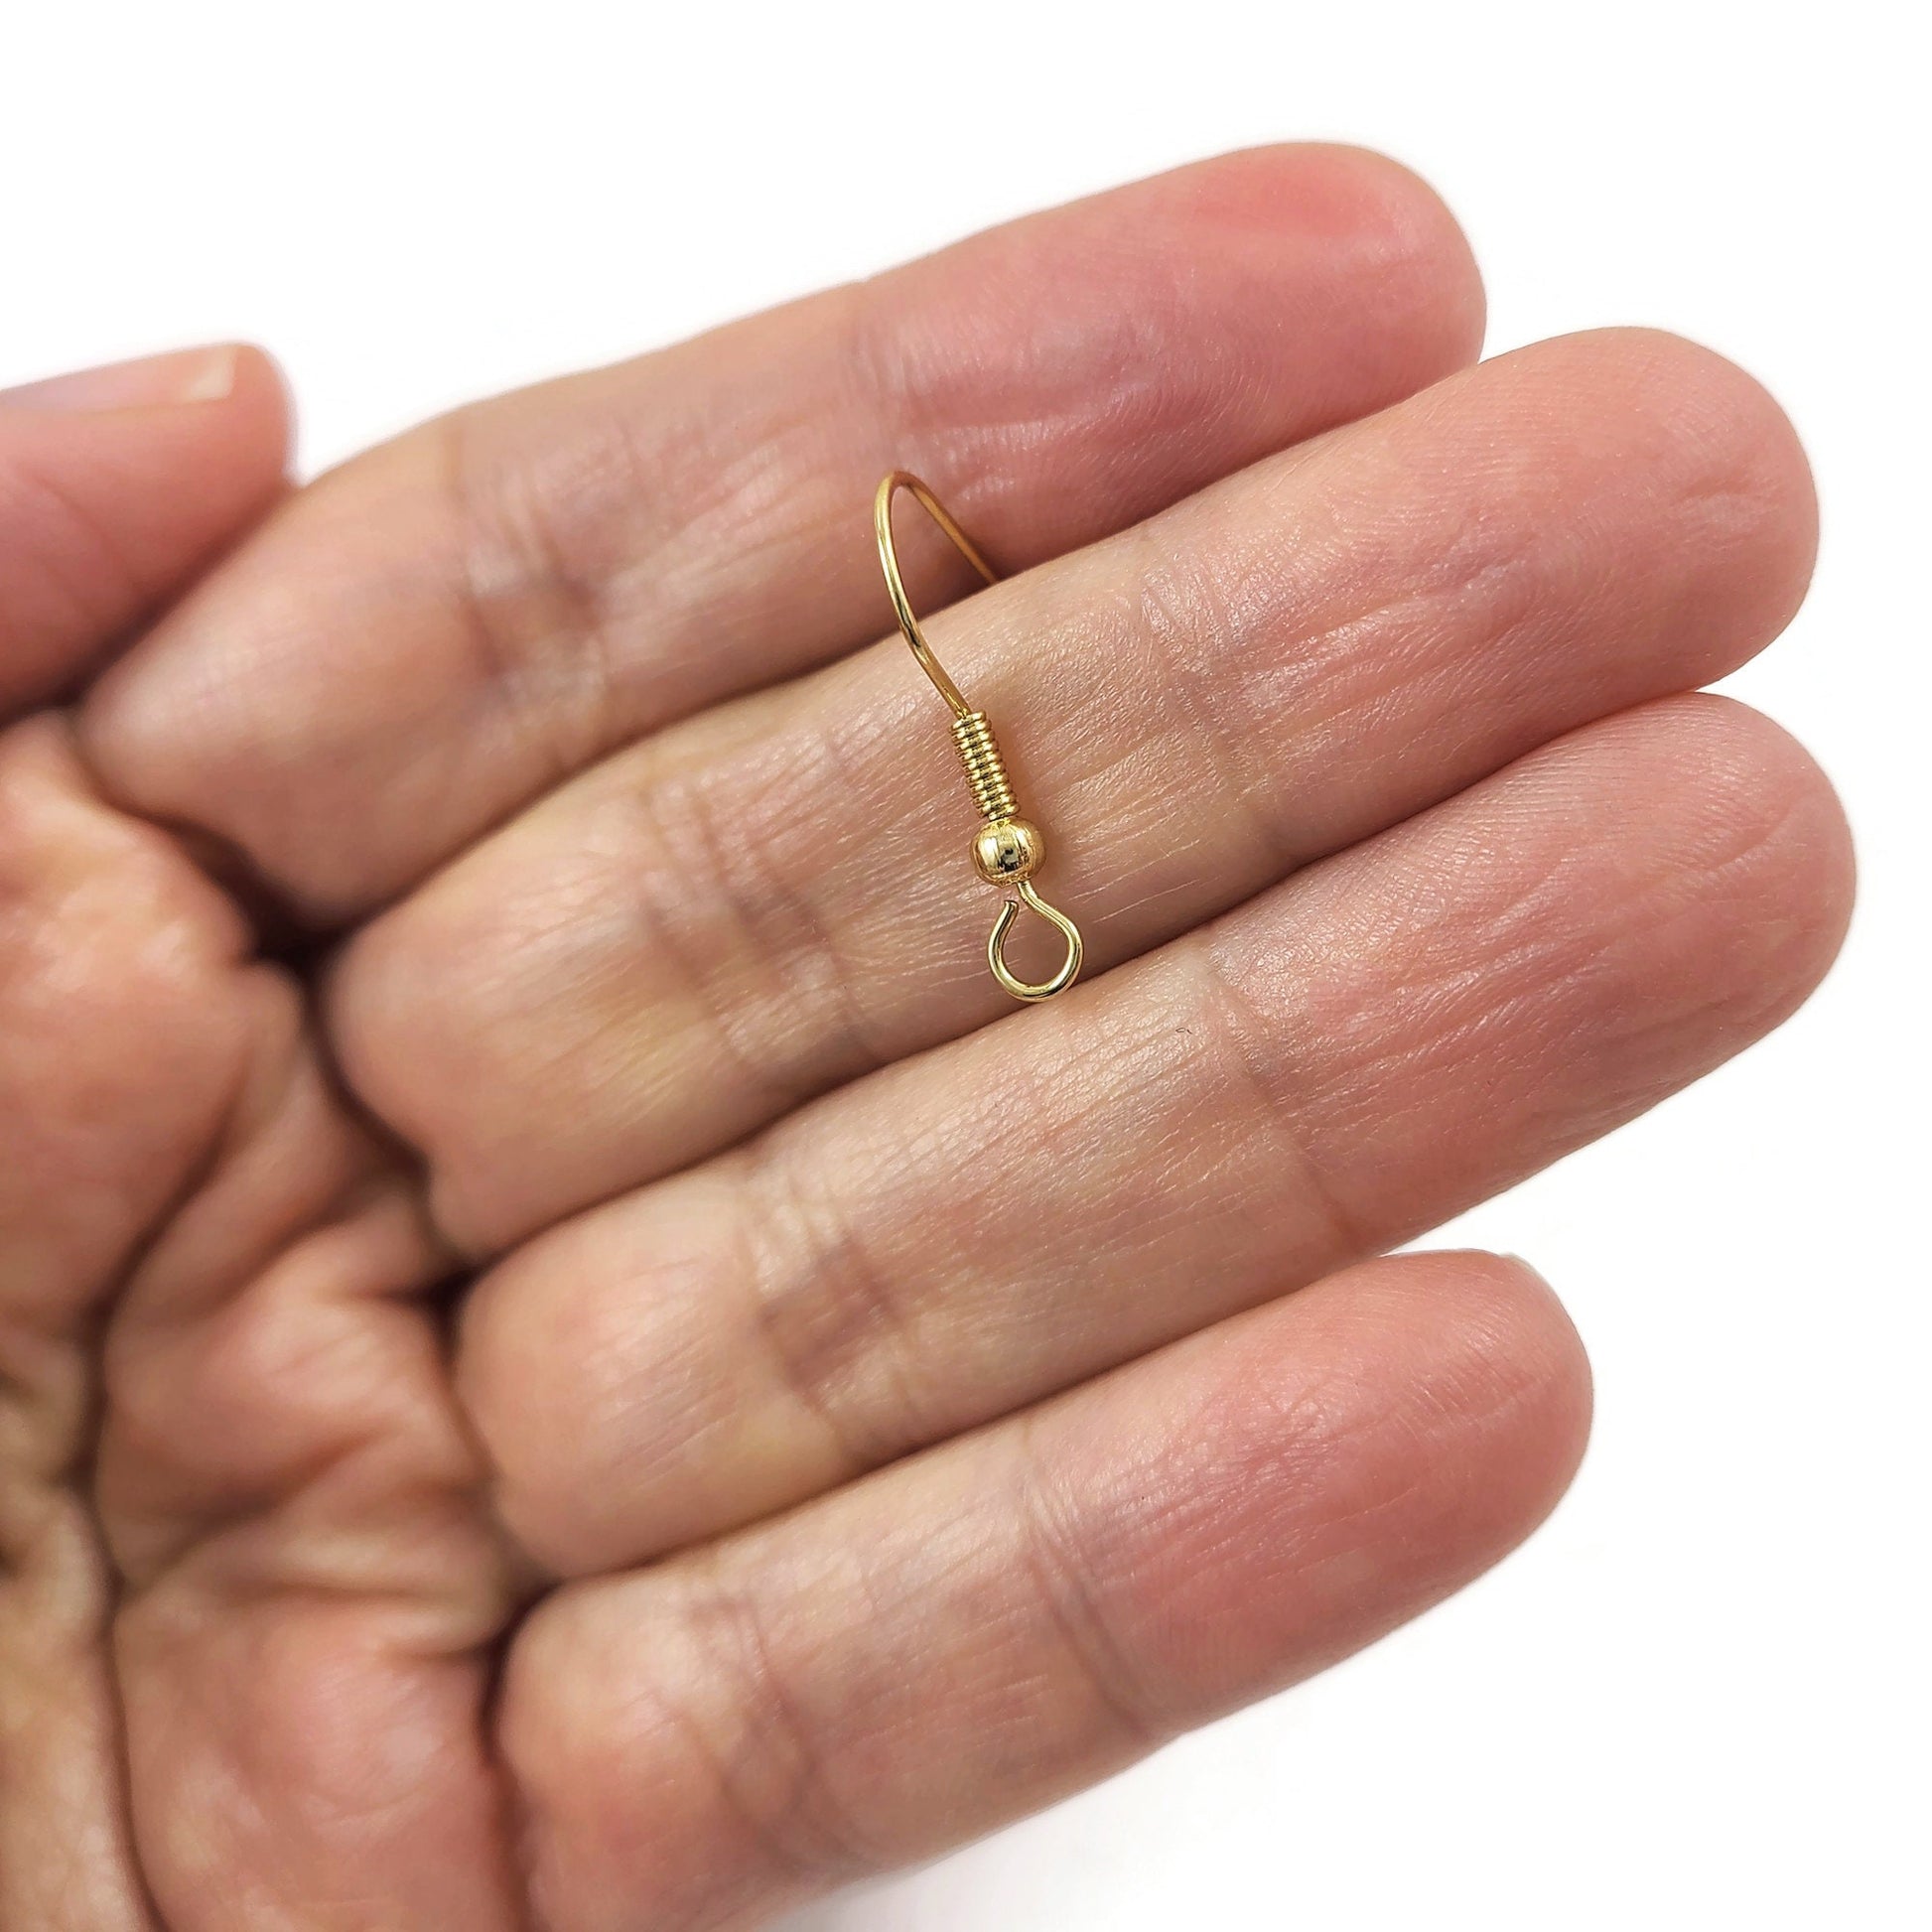 Hypoallergenic earring hooks, Nickel free 18K gold plated ear wire, Front loop